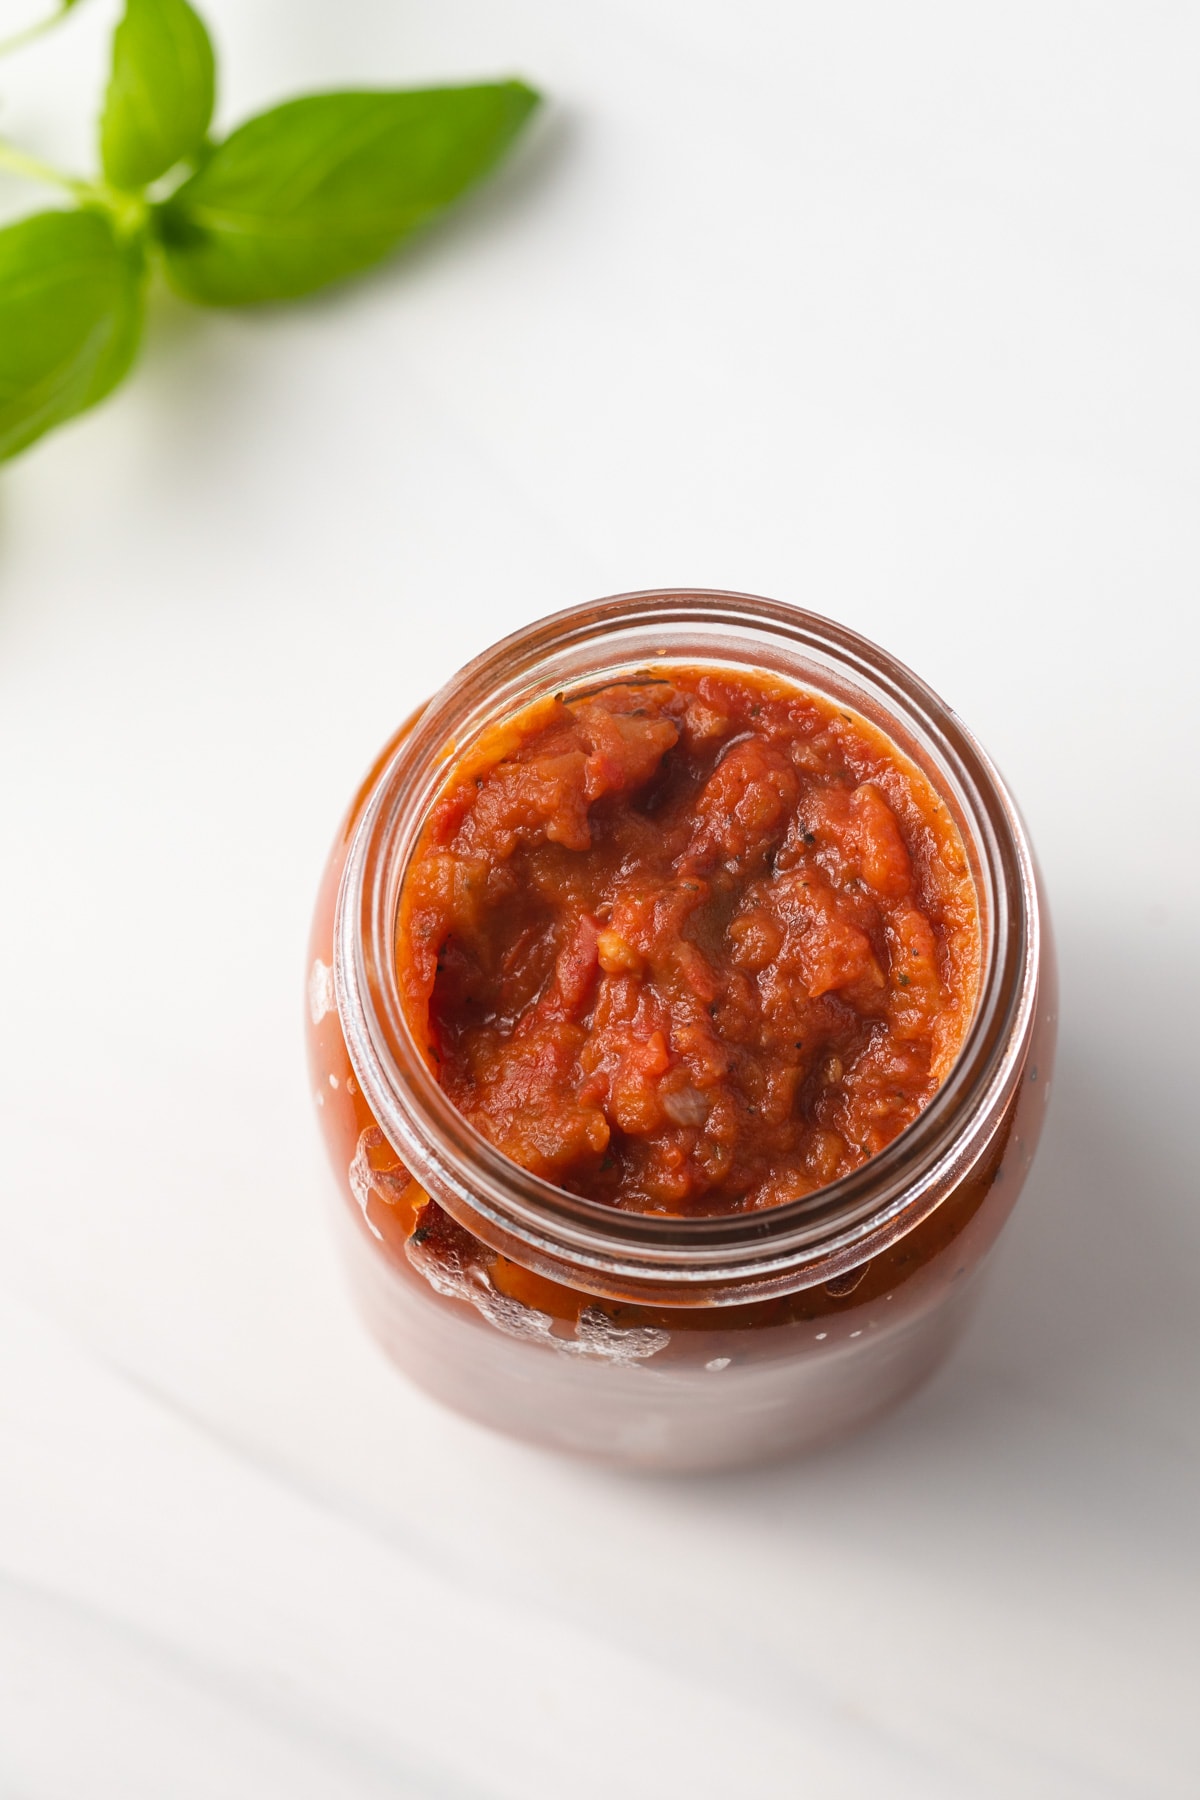 Eggplant tomato sauce in jar.